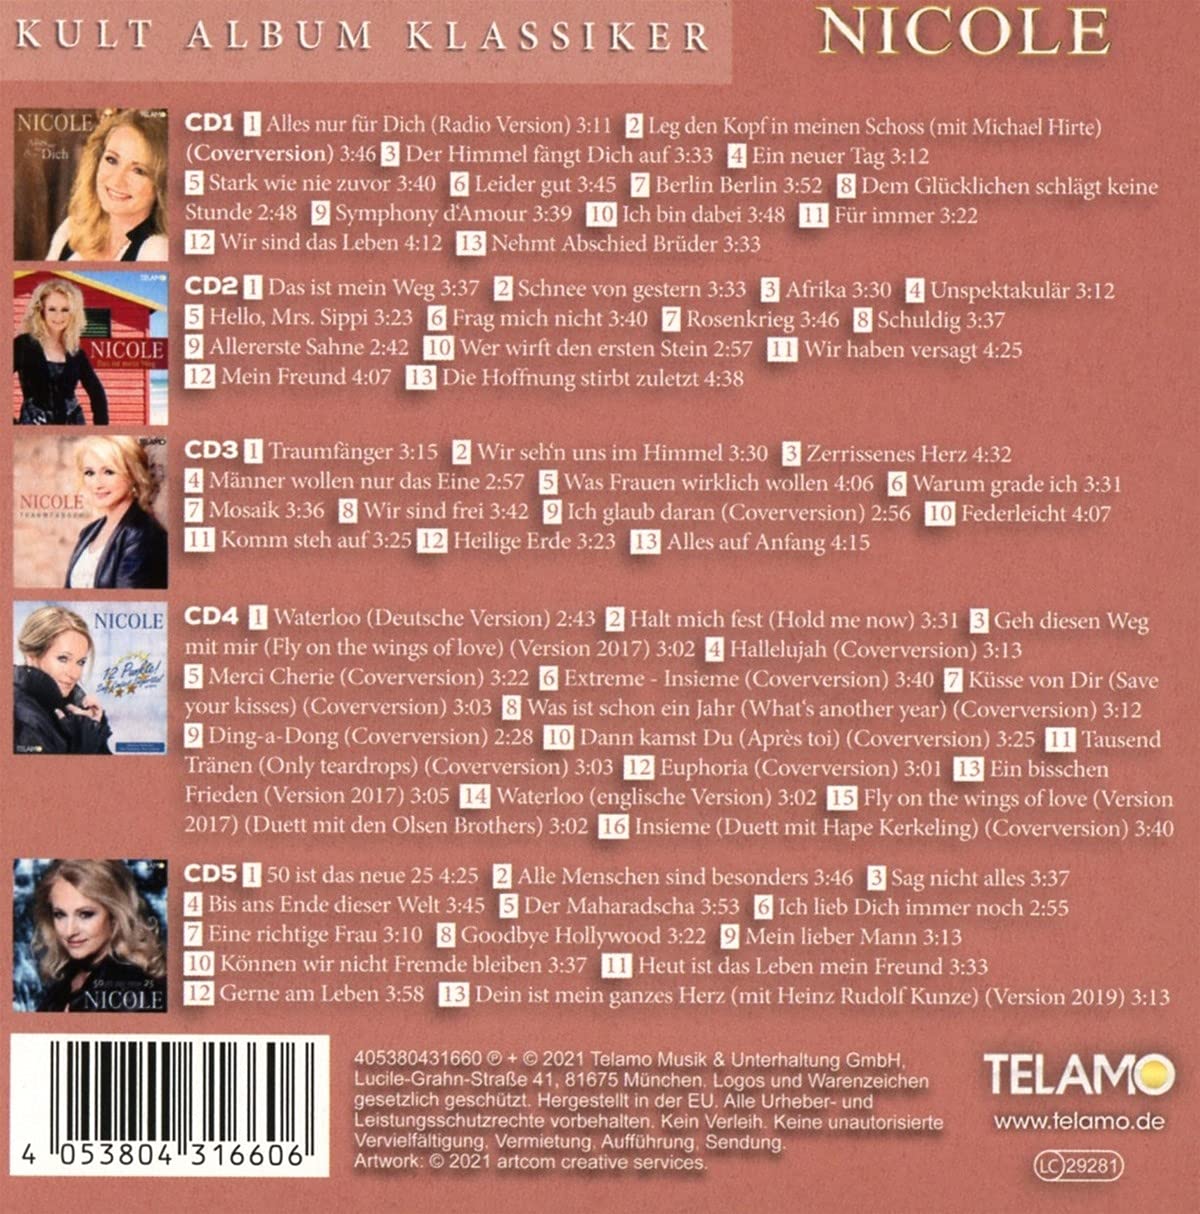 Nicole - Kult Album Klassiker (2021)